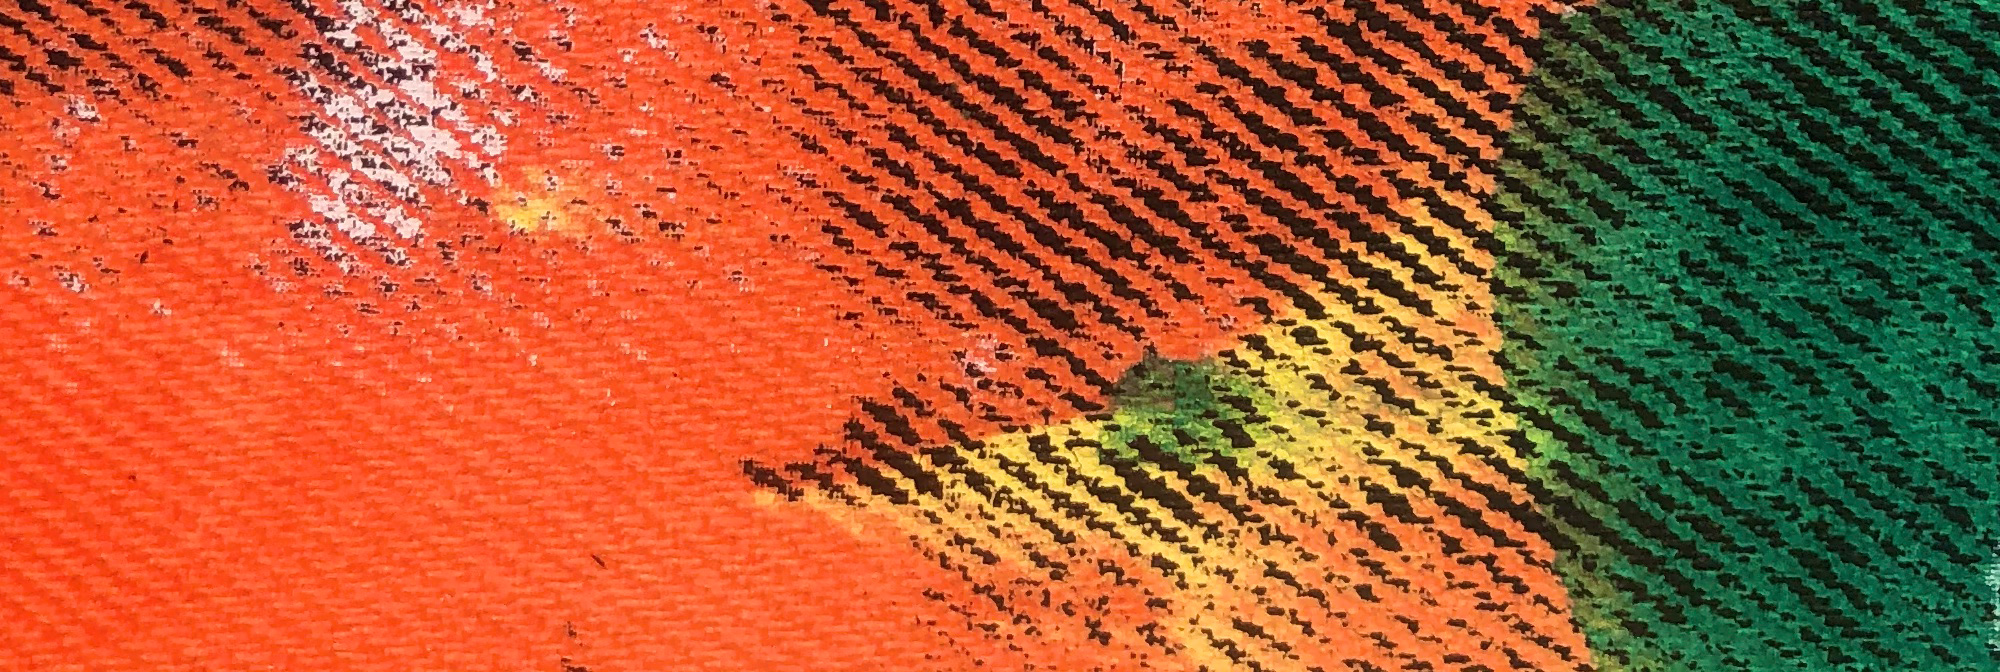 Vibrant orange and green textile